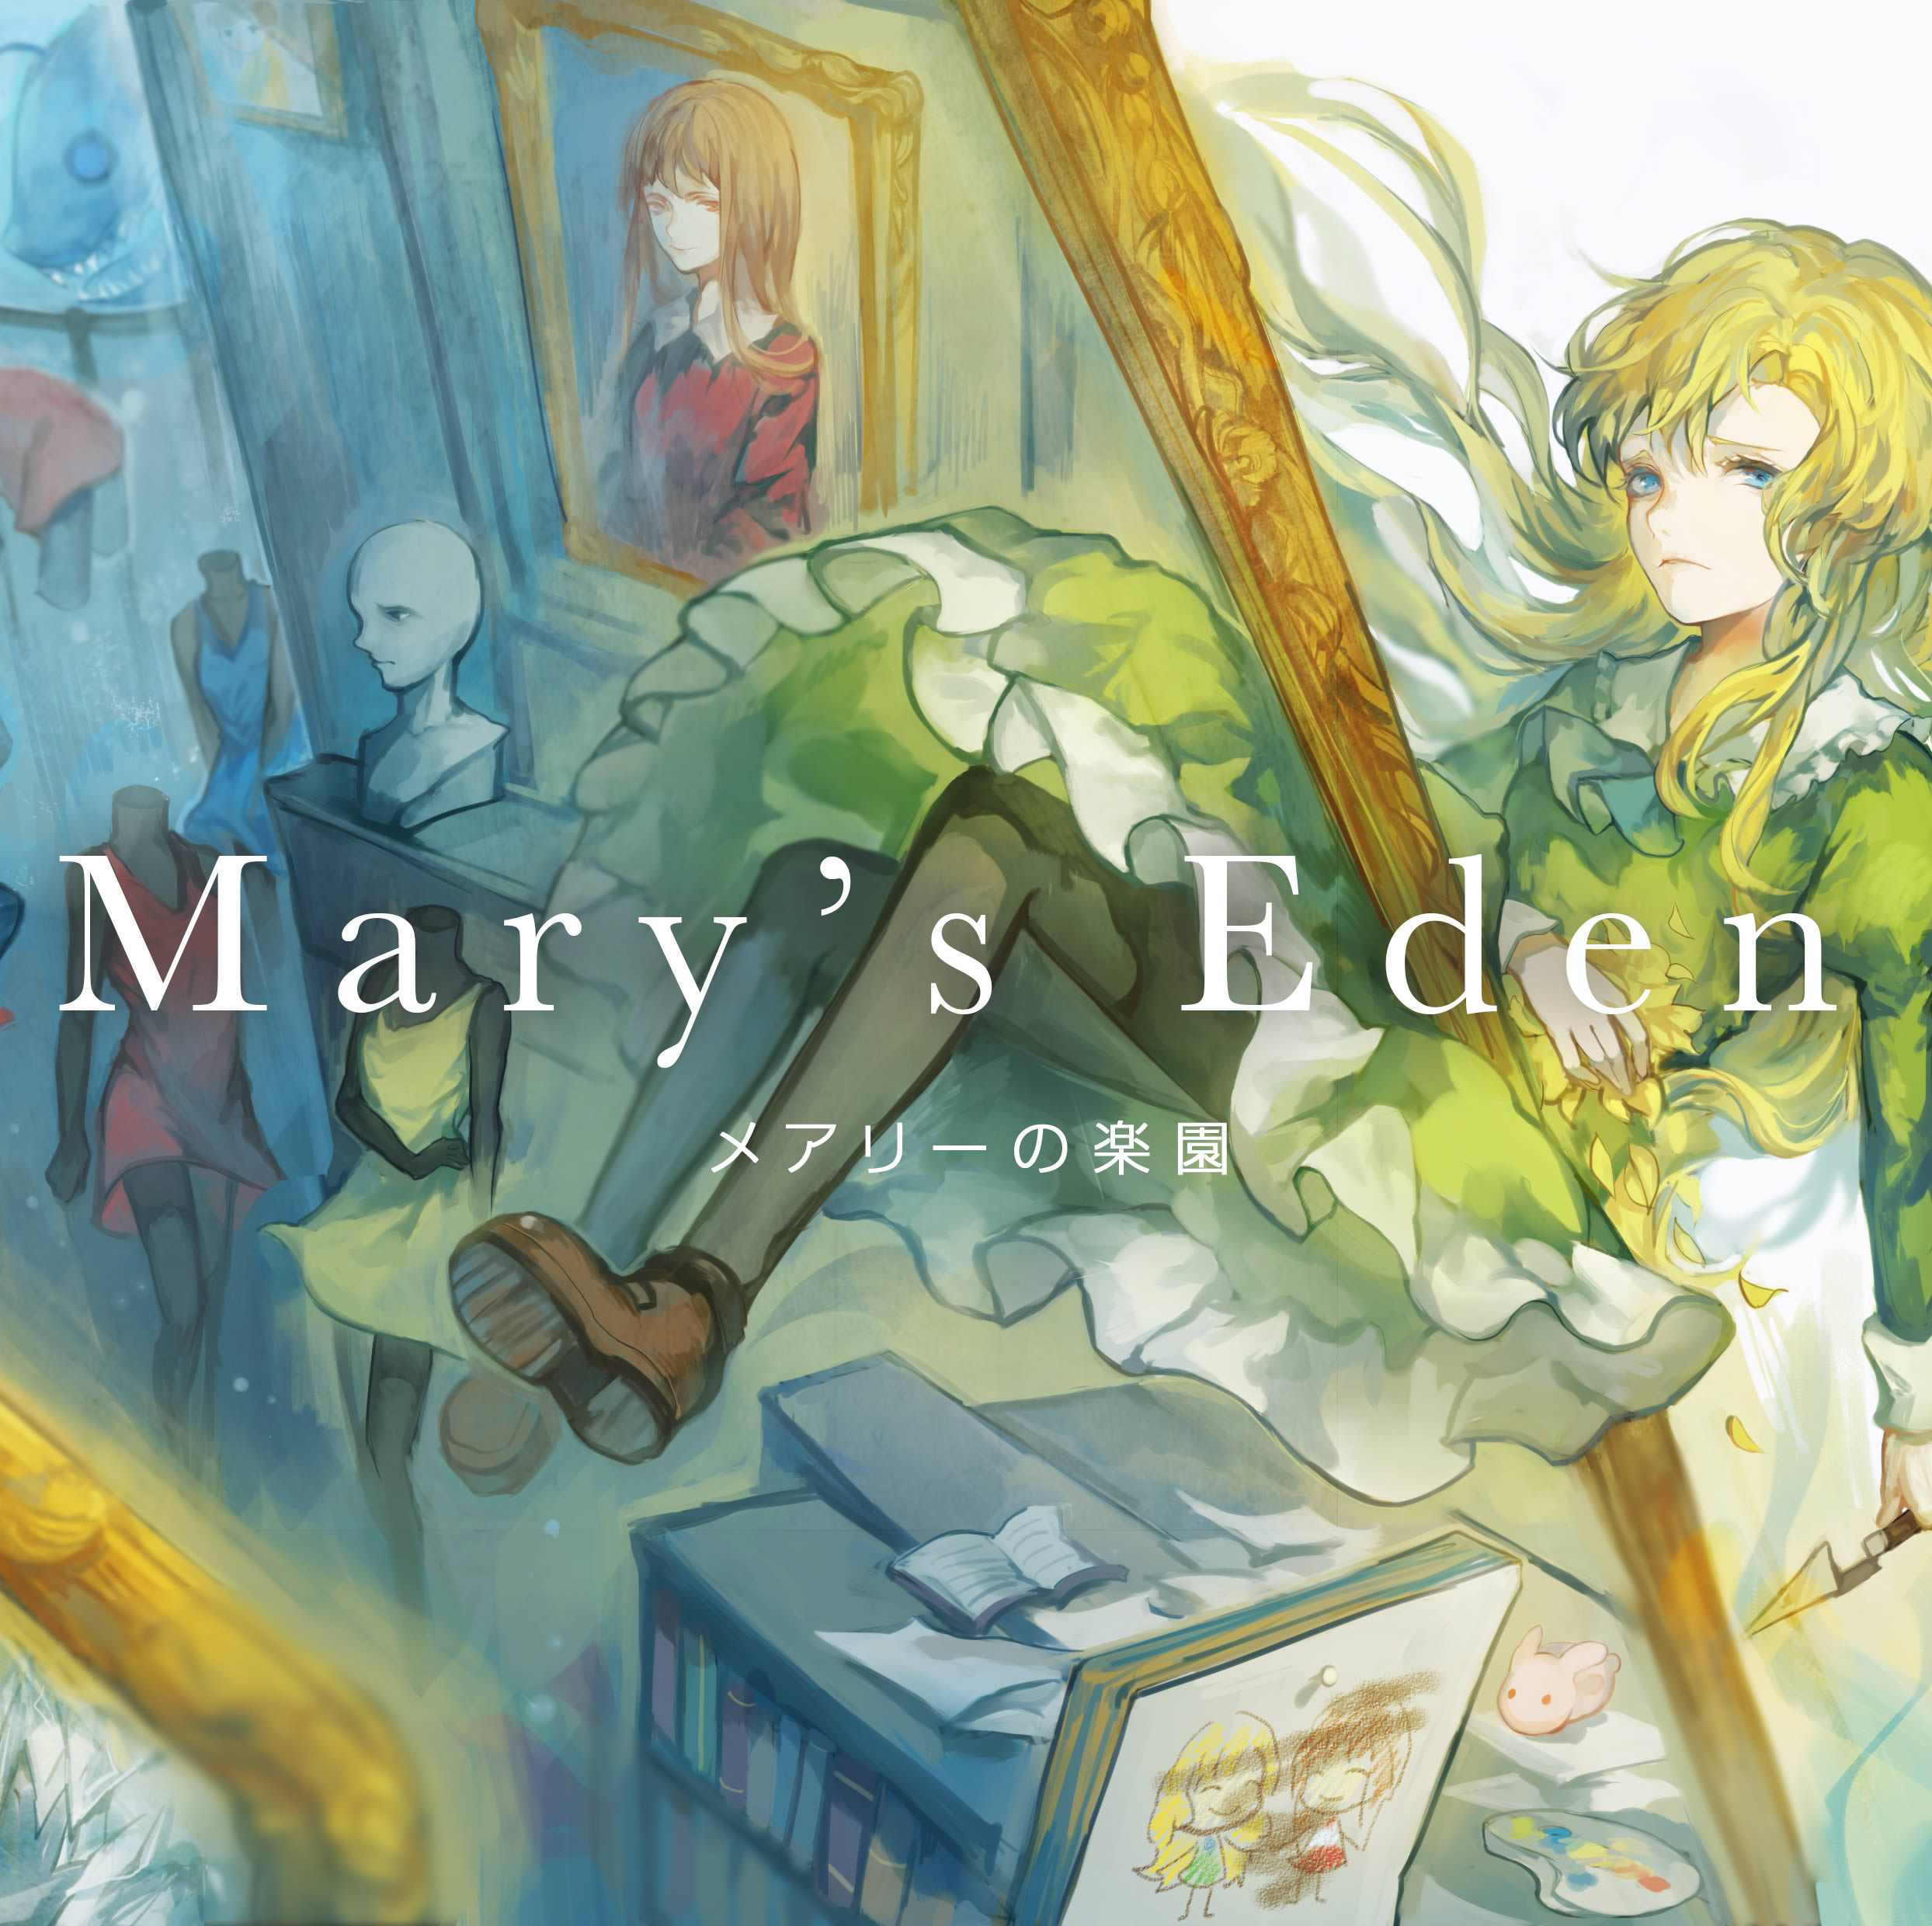 Mary's Eden Concept Music